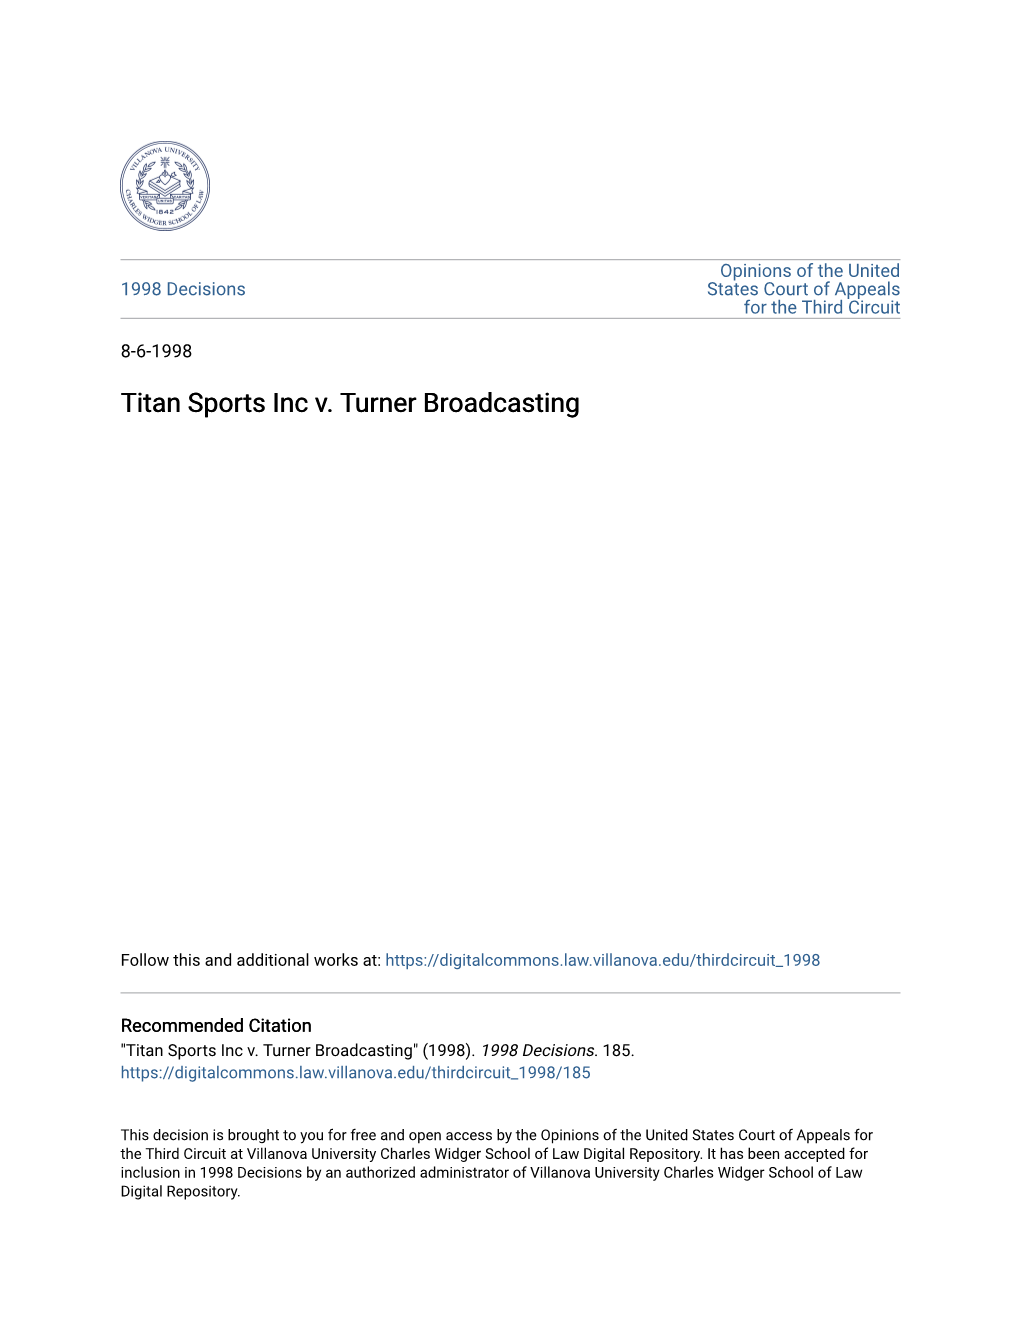 Titan Sports Inc V. Turner Broadcasting